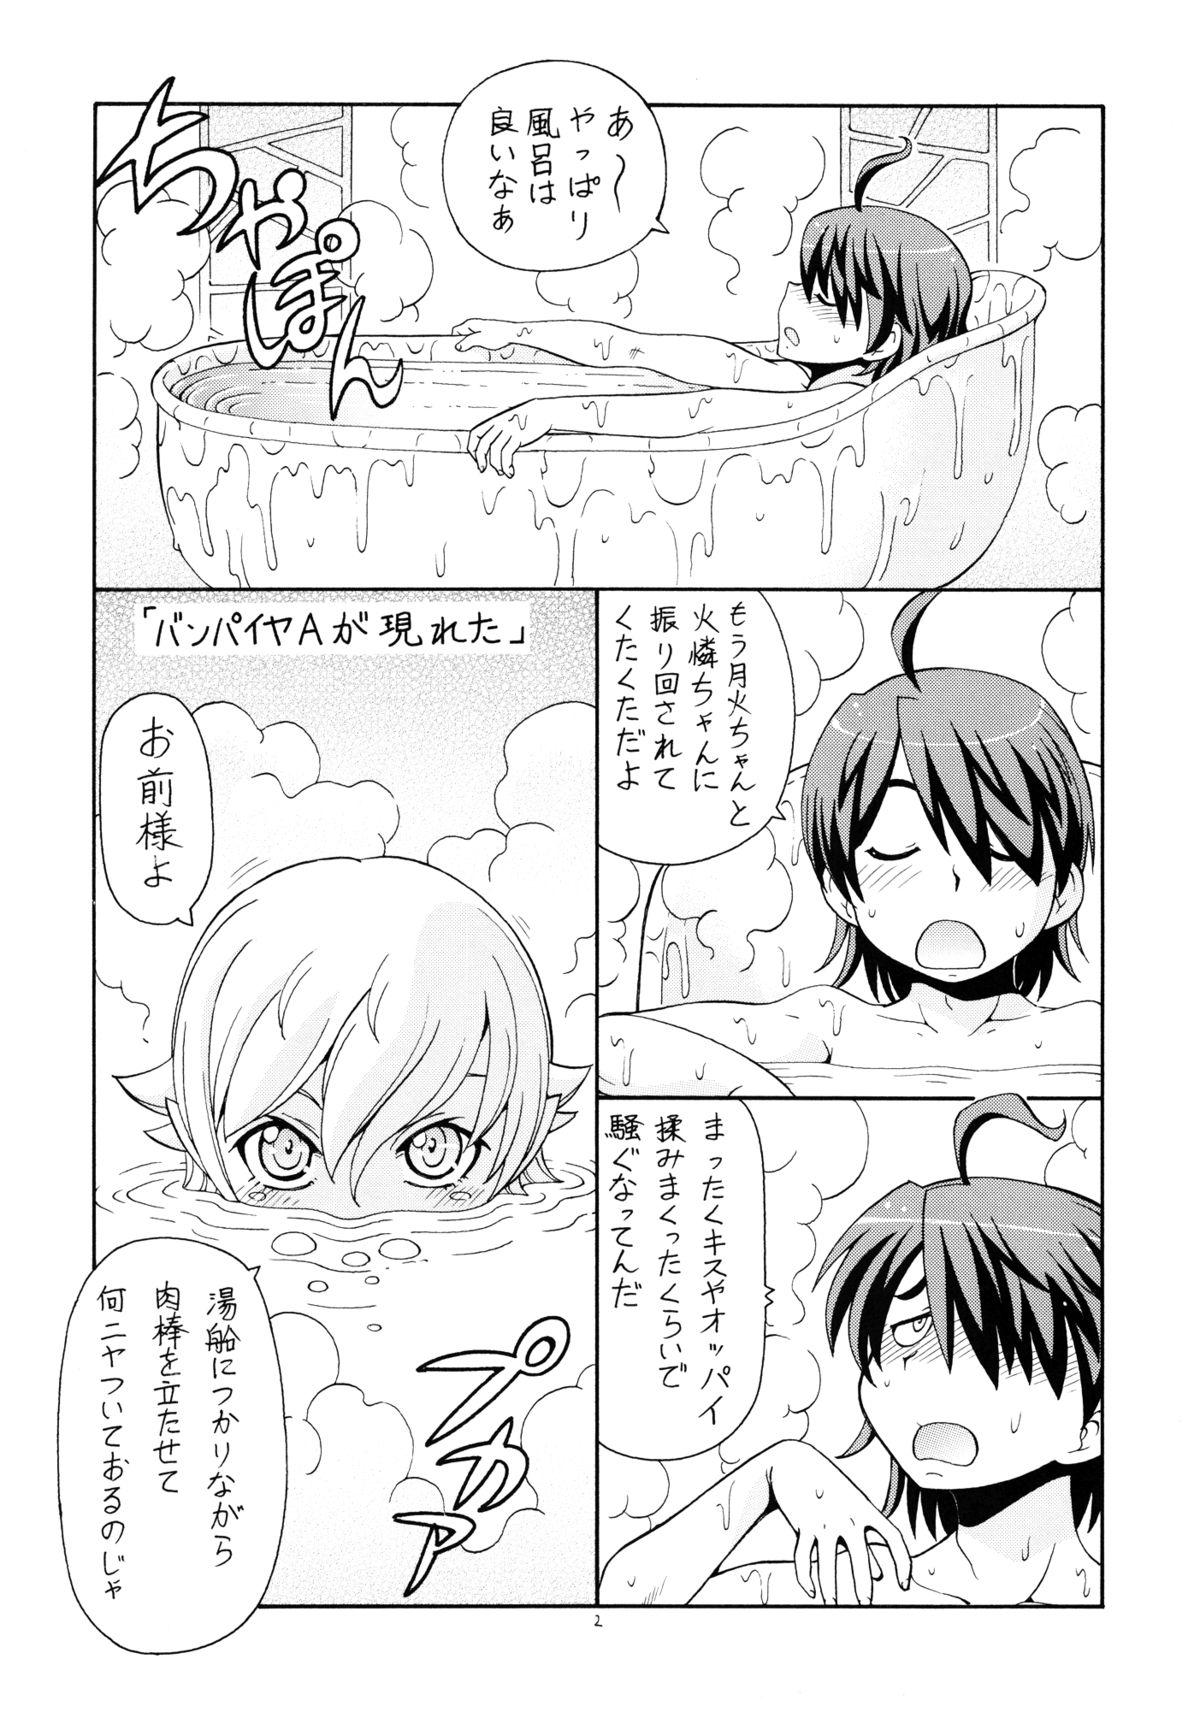 Studs Hito ni Hakanai to Kaite "Araragi" to Yomu 5&6 - Bakemonogatari Hunks - Page 3